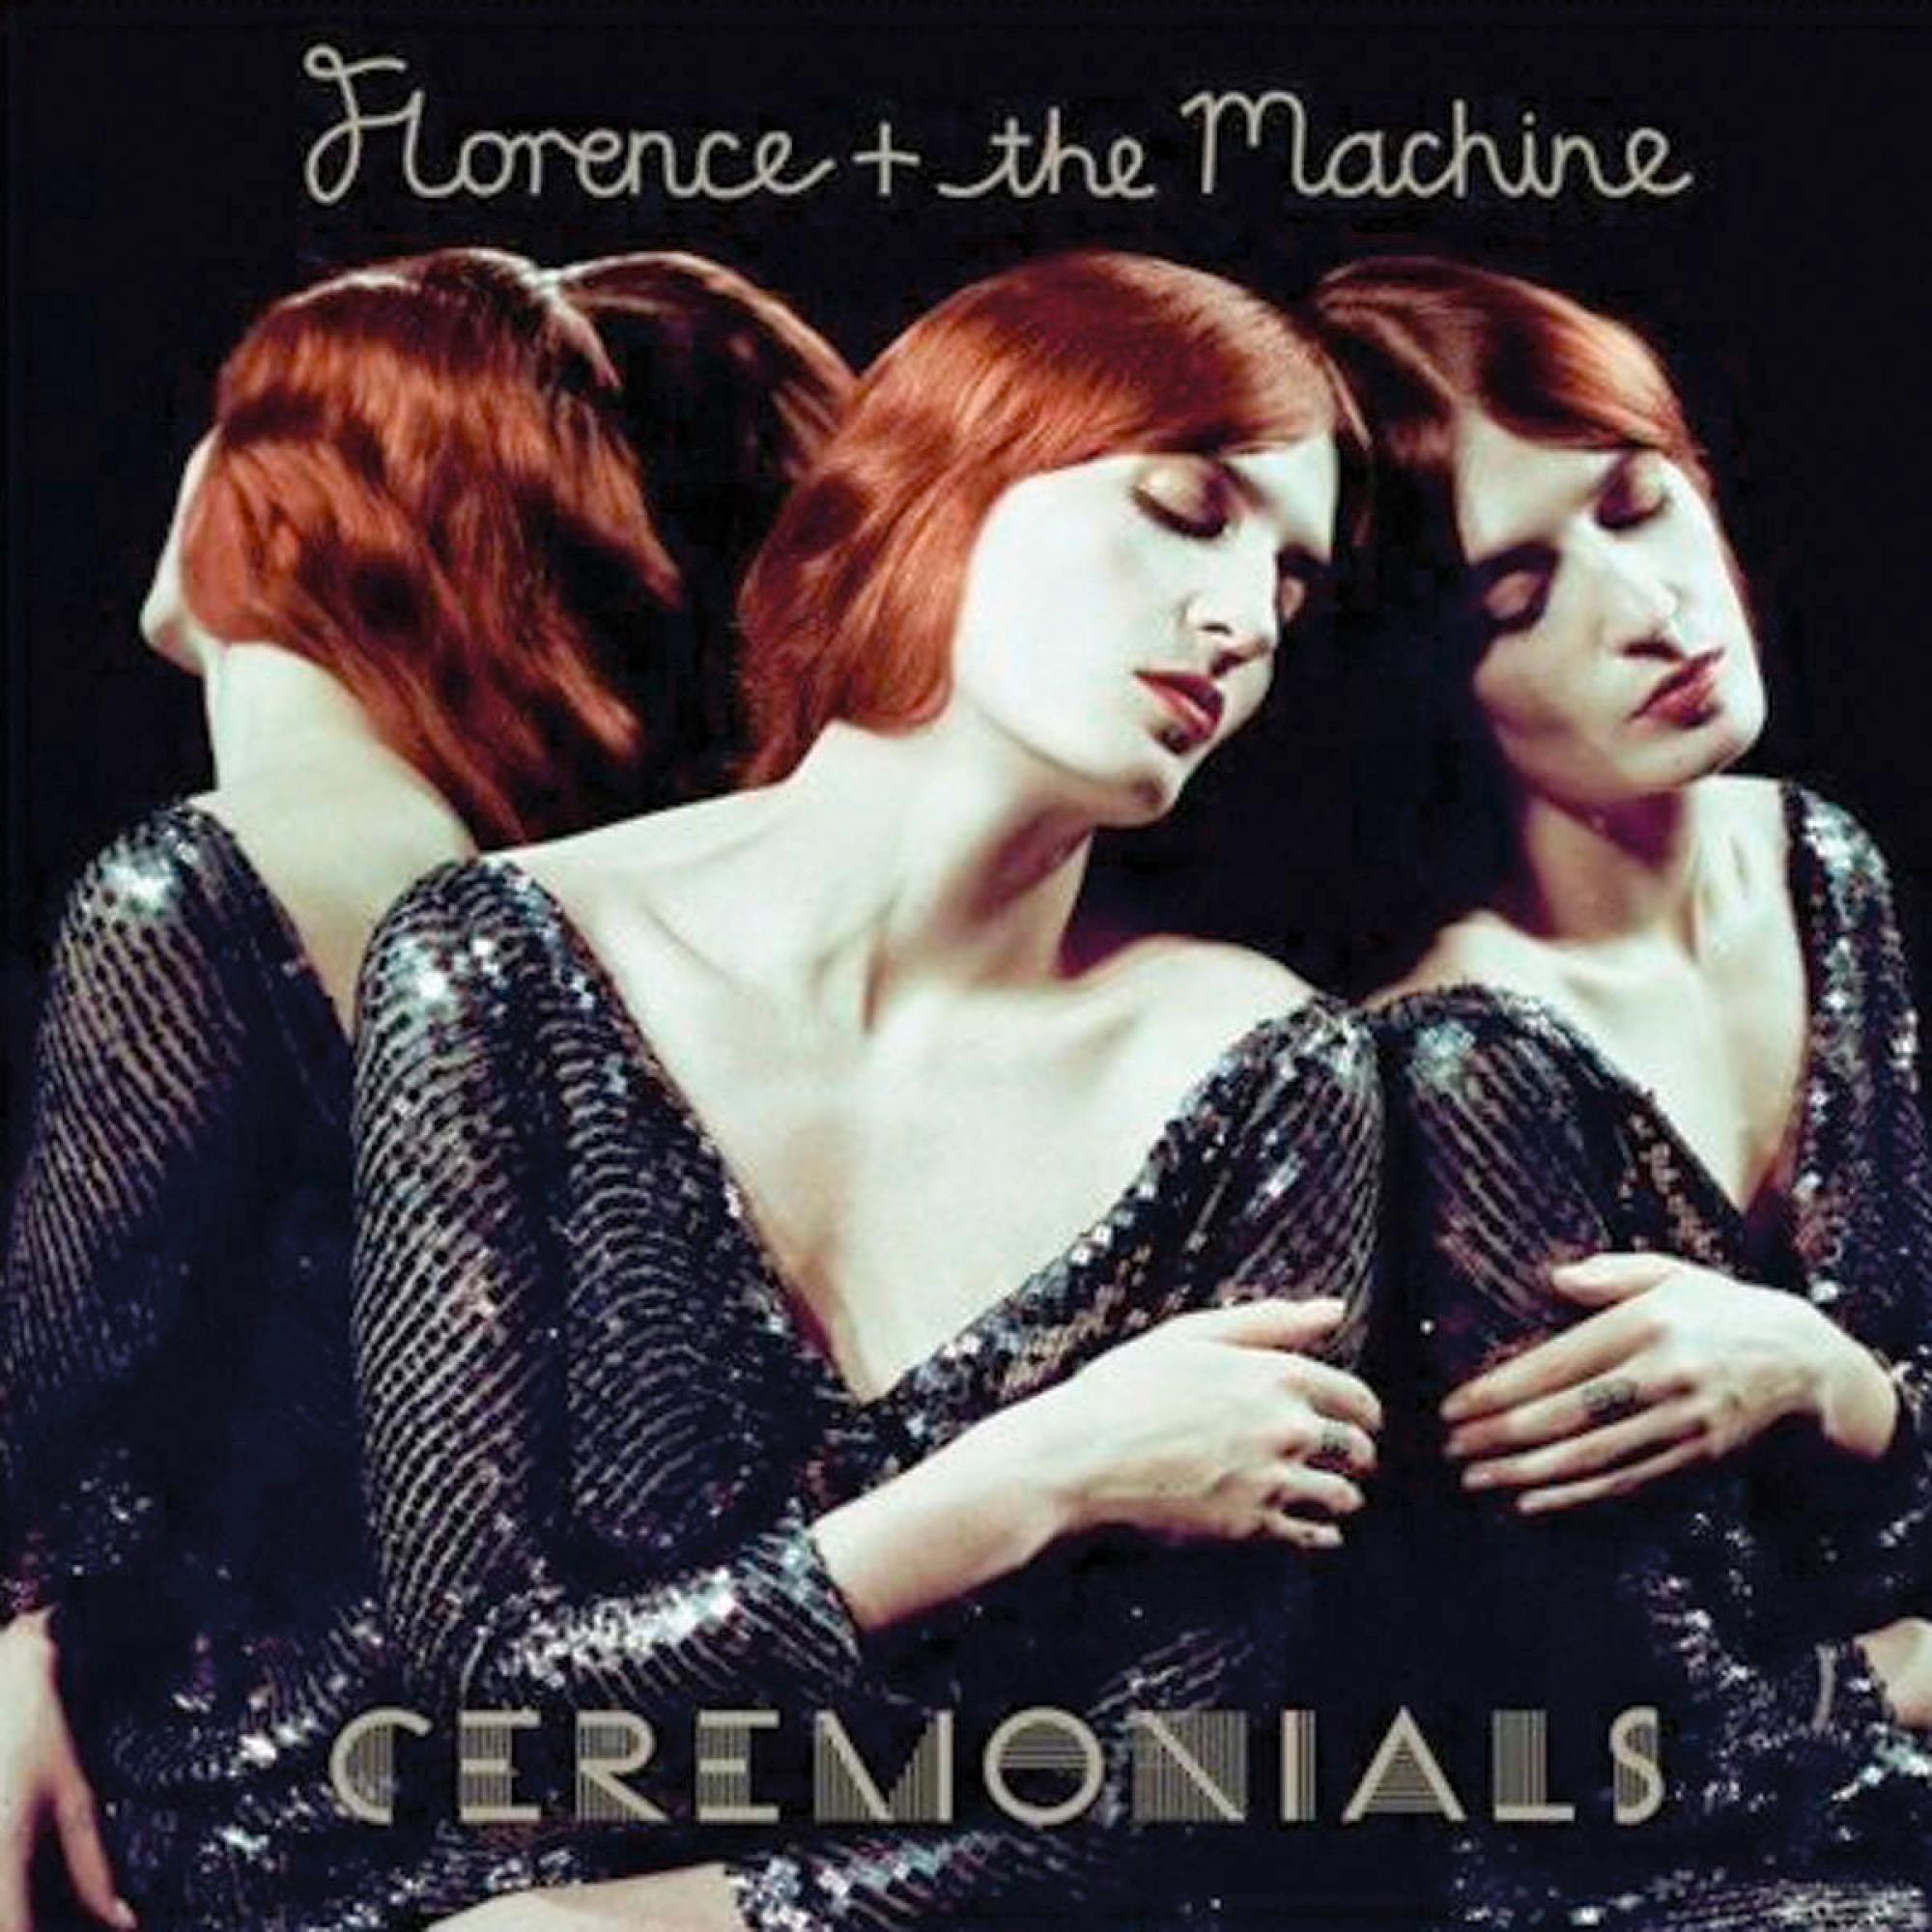 Florence + The Machine - - Ceremonials (Vinyl)